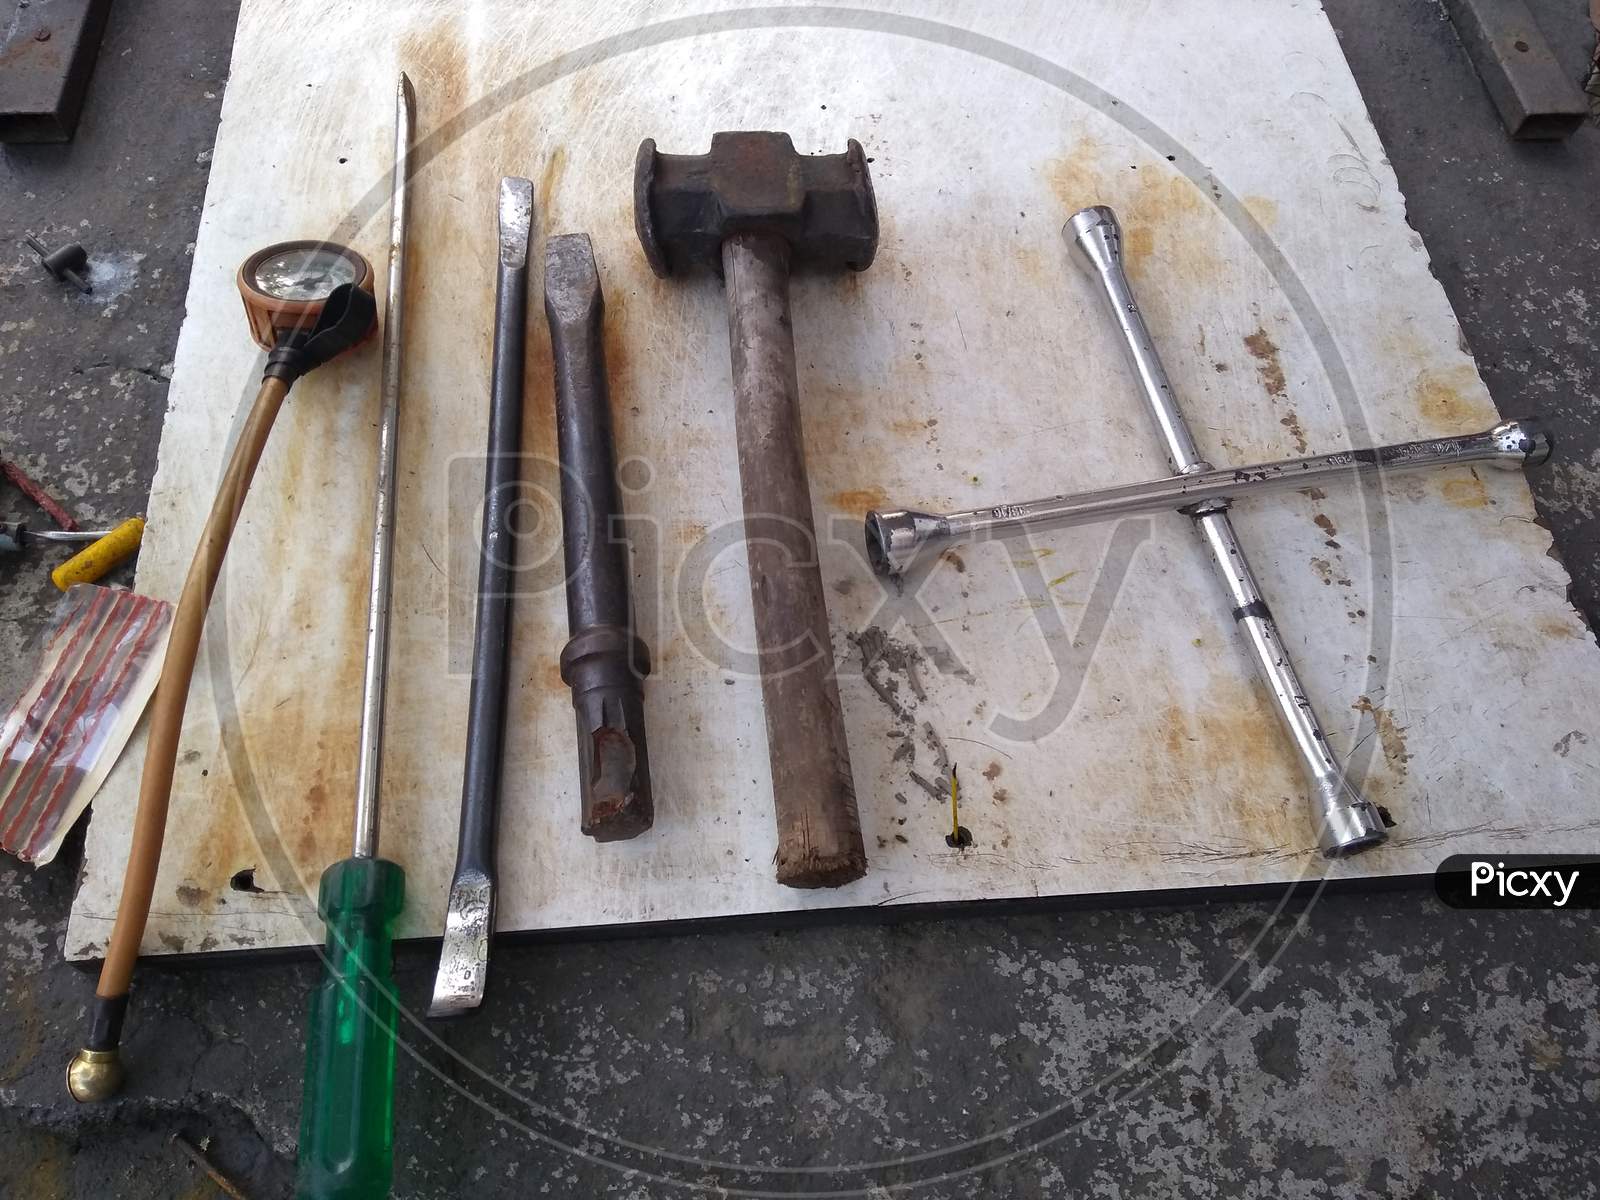 Tool Sets For Mechanic/ Pacher Shop.